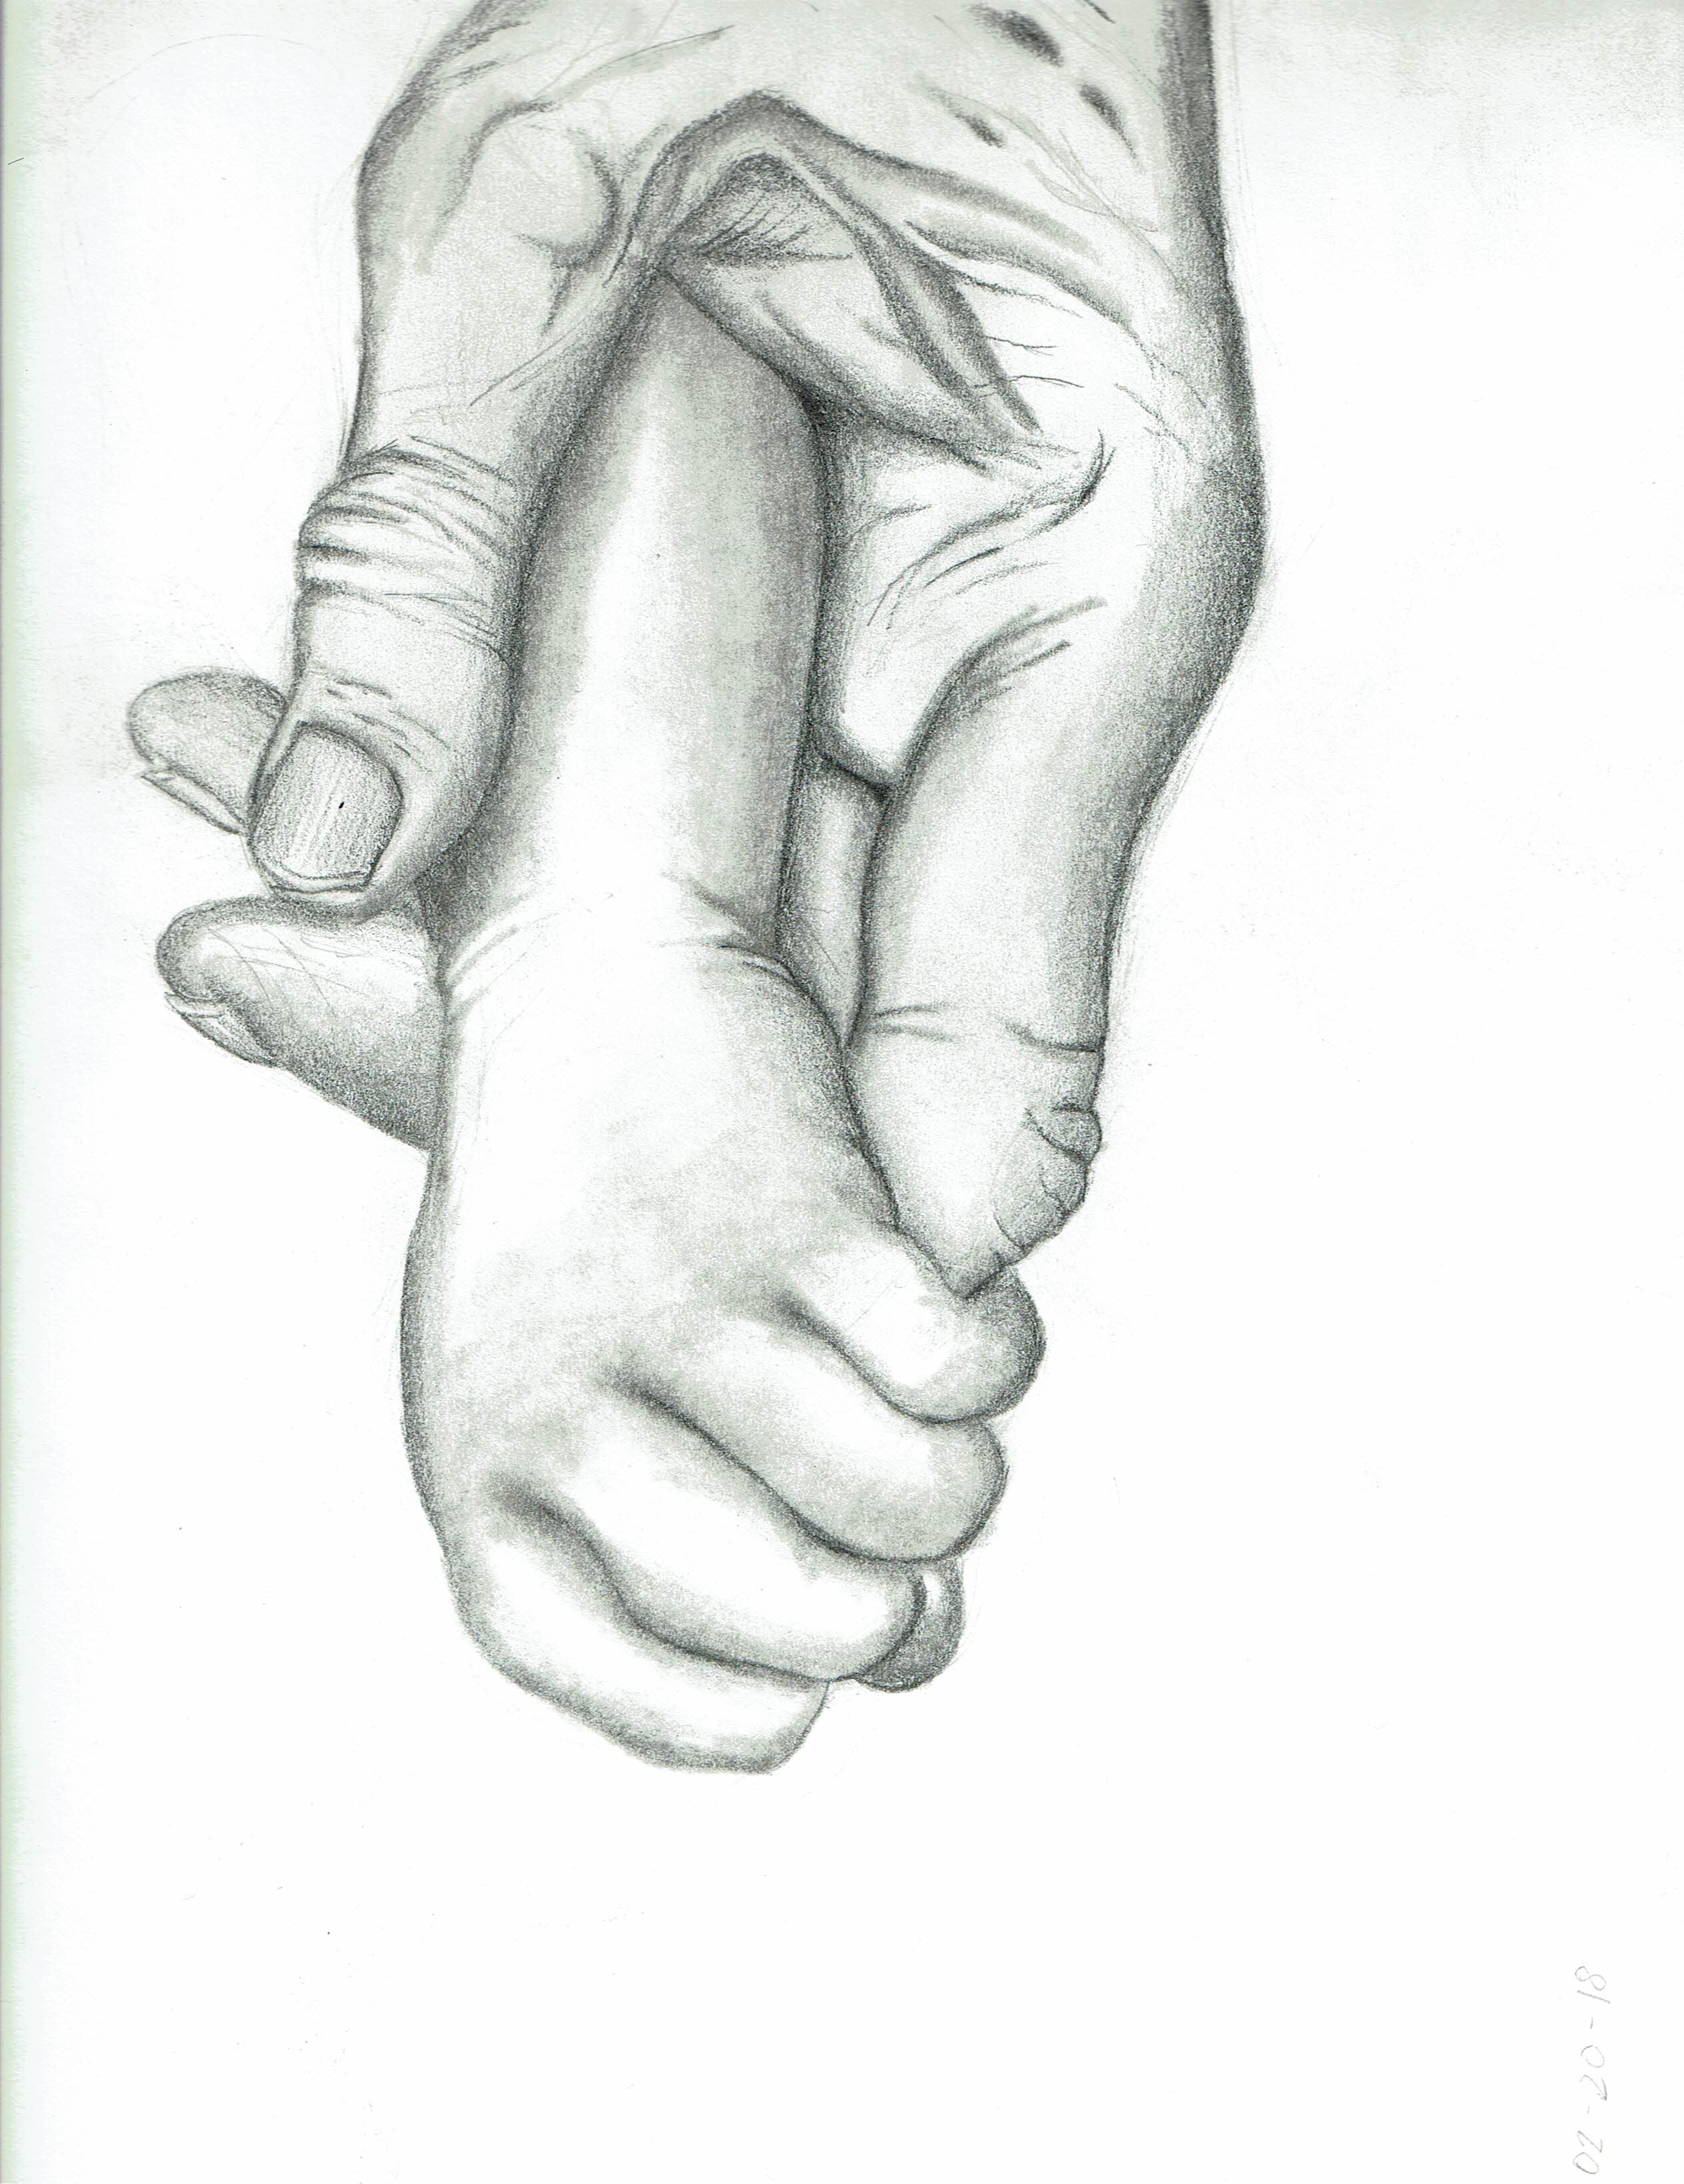 An elder's hand holding a child's hand